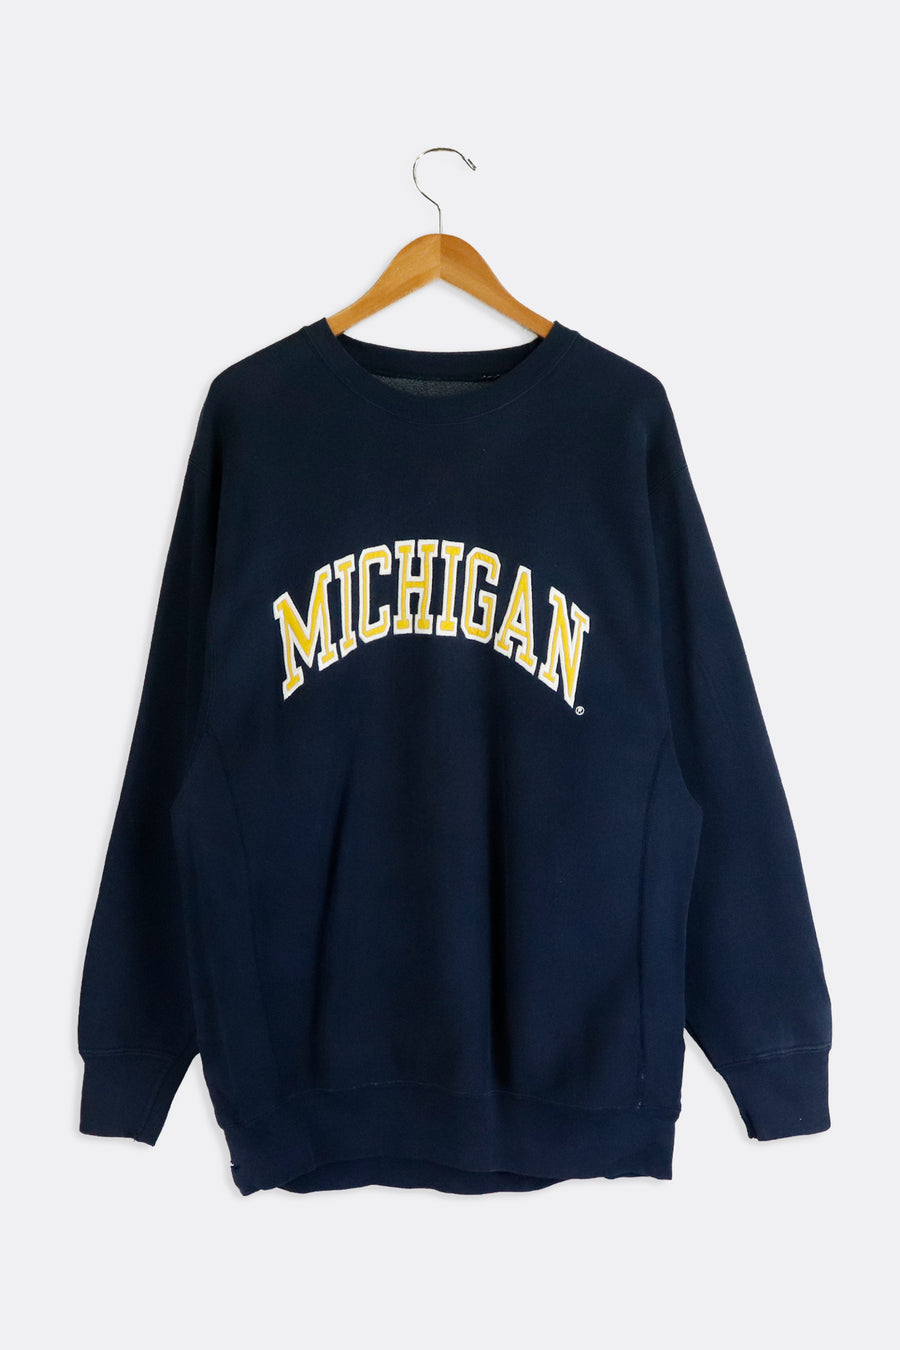 Vintage Michigan State Yellow Bold Embroidery Patch Sweatshirt Sz XL